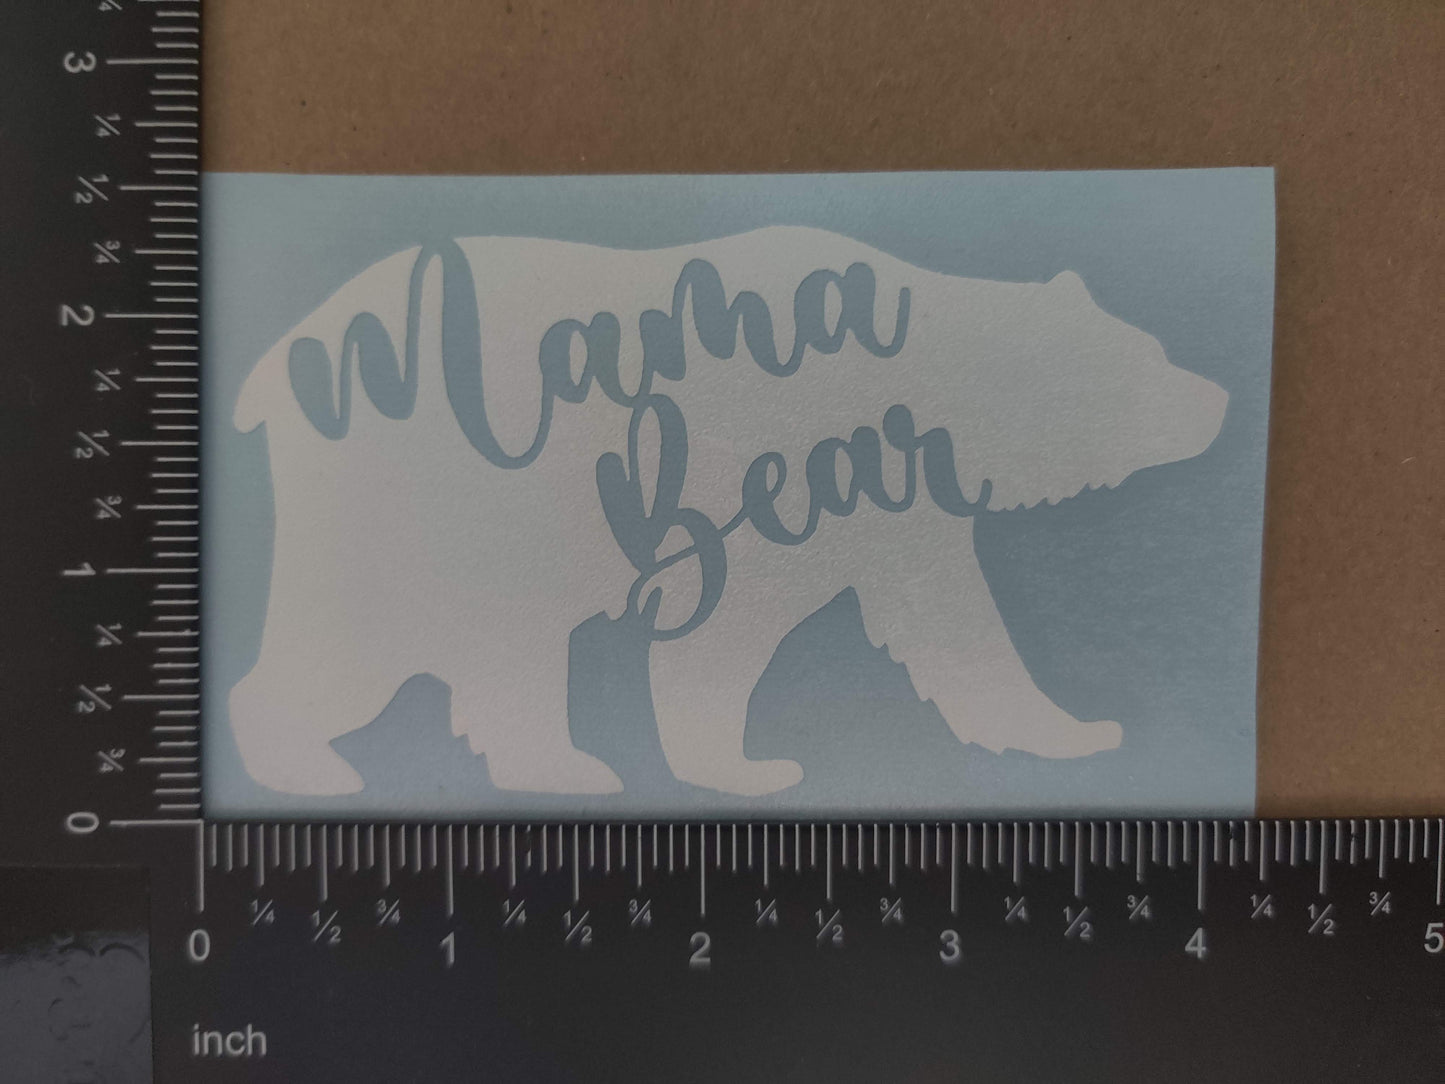 Mama Bear Decal 4 Pack